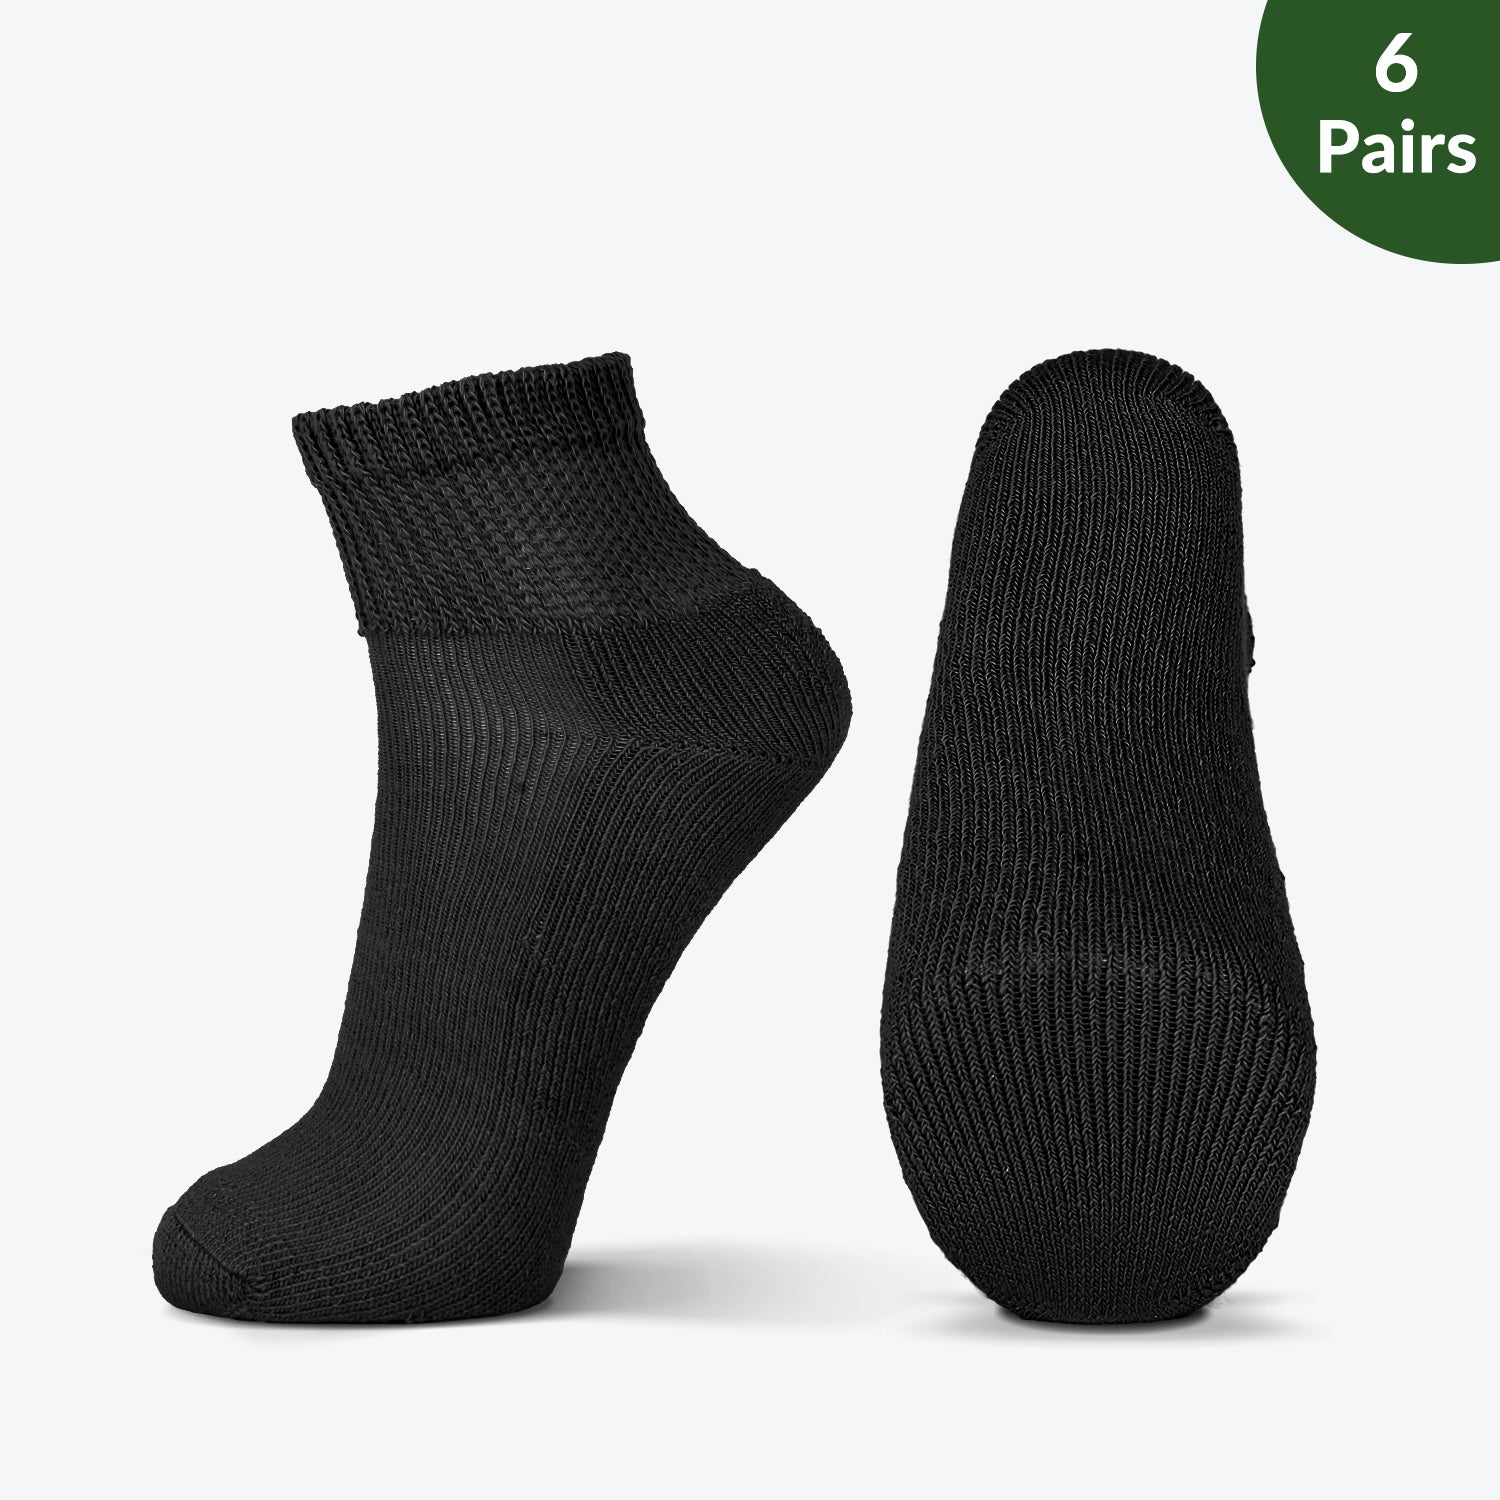 Ankle Socks Non Binding Top for Swollen Feet 6 Paris